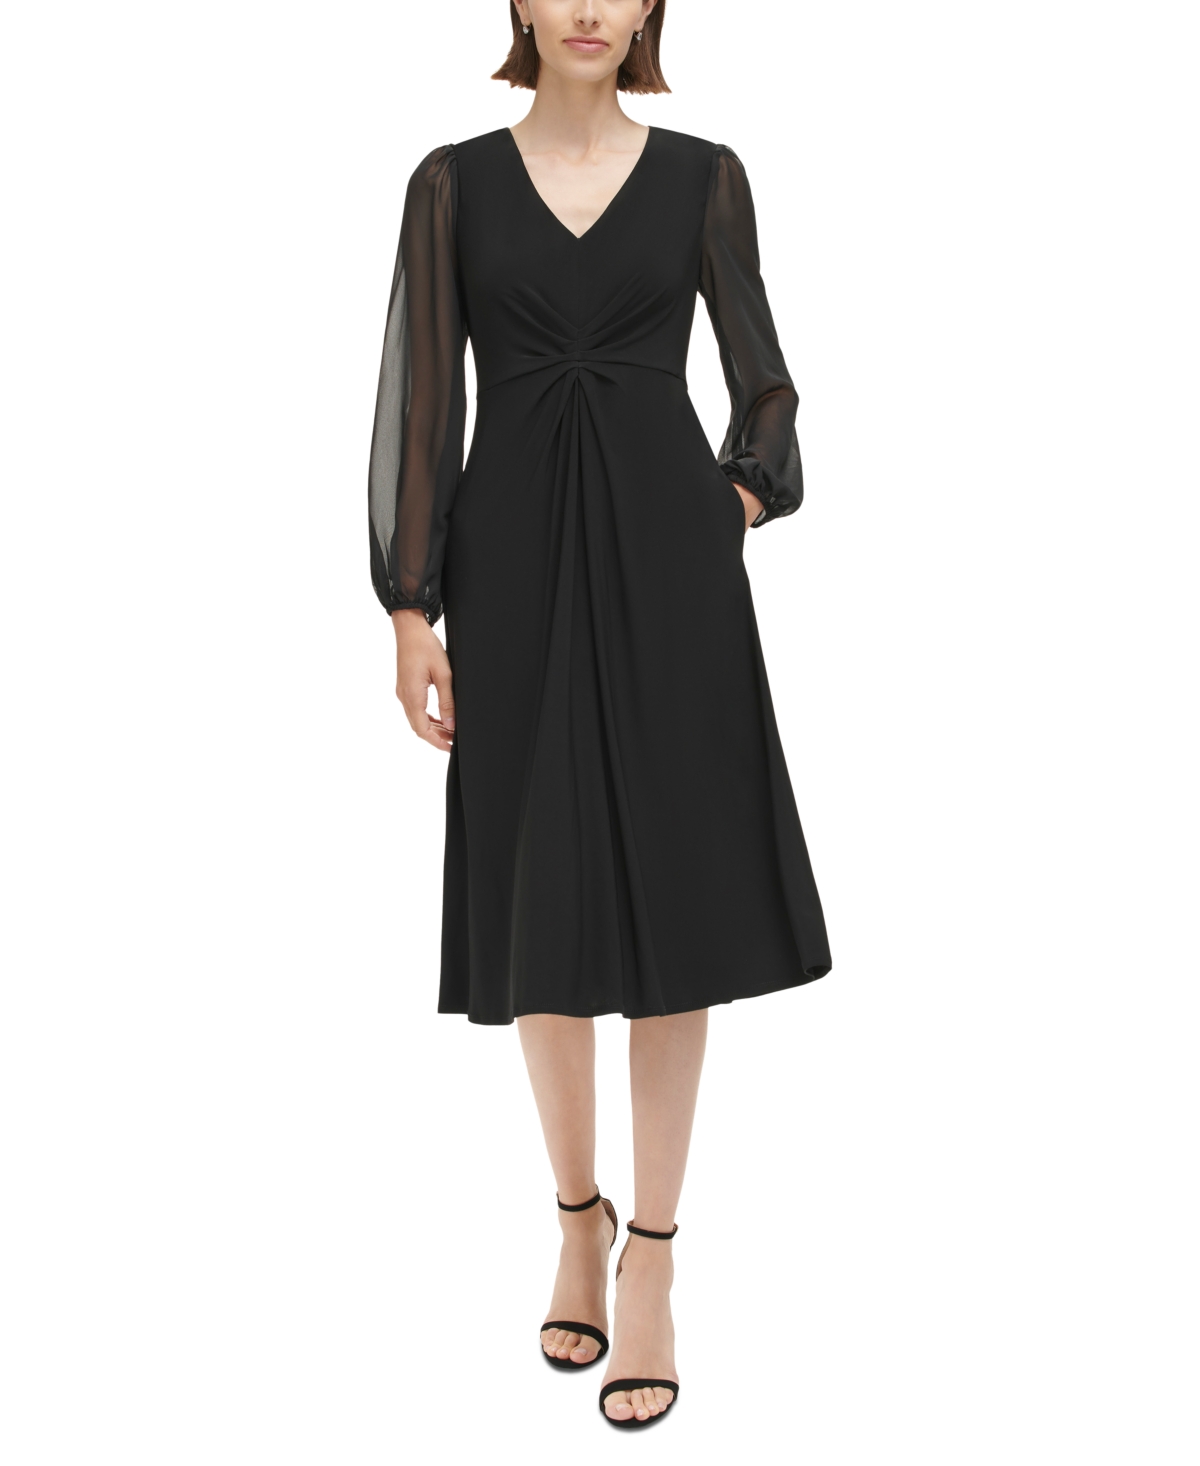 Vintage Evening Dresses, Vintage Formal Dresses Jessica Howard Petite Gathered Blouson-Sleeve Midi Dress - Black $53.99 AT vintagedancer.com